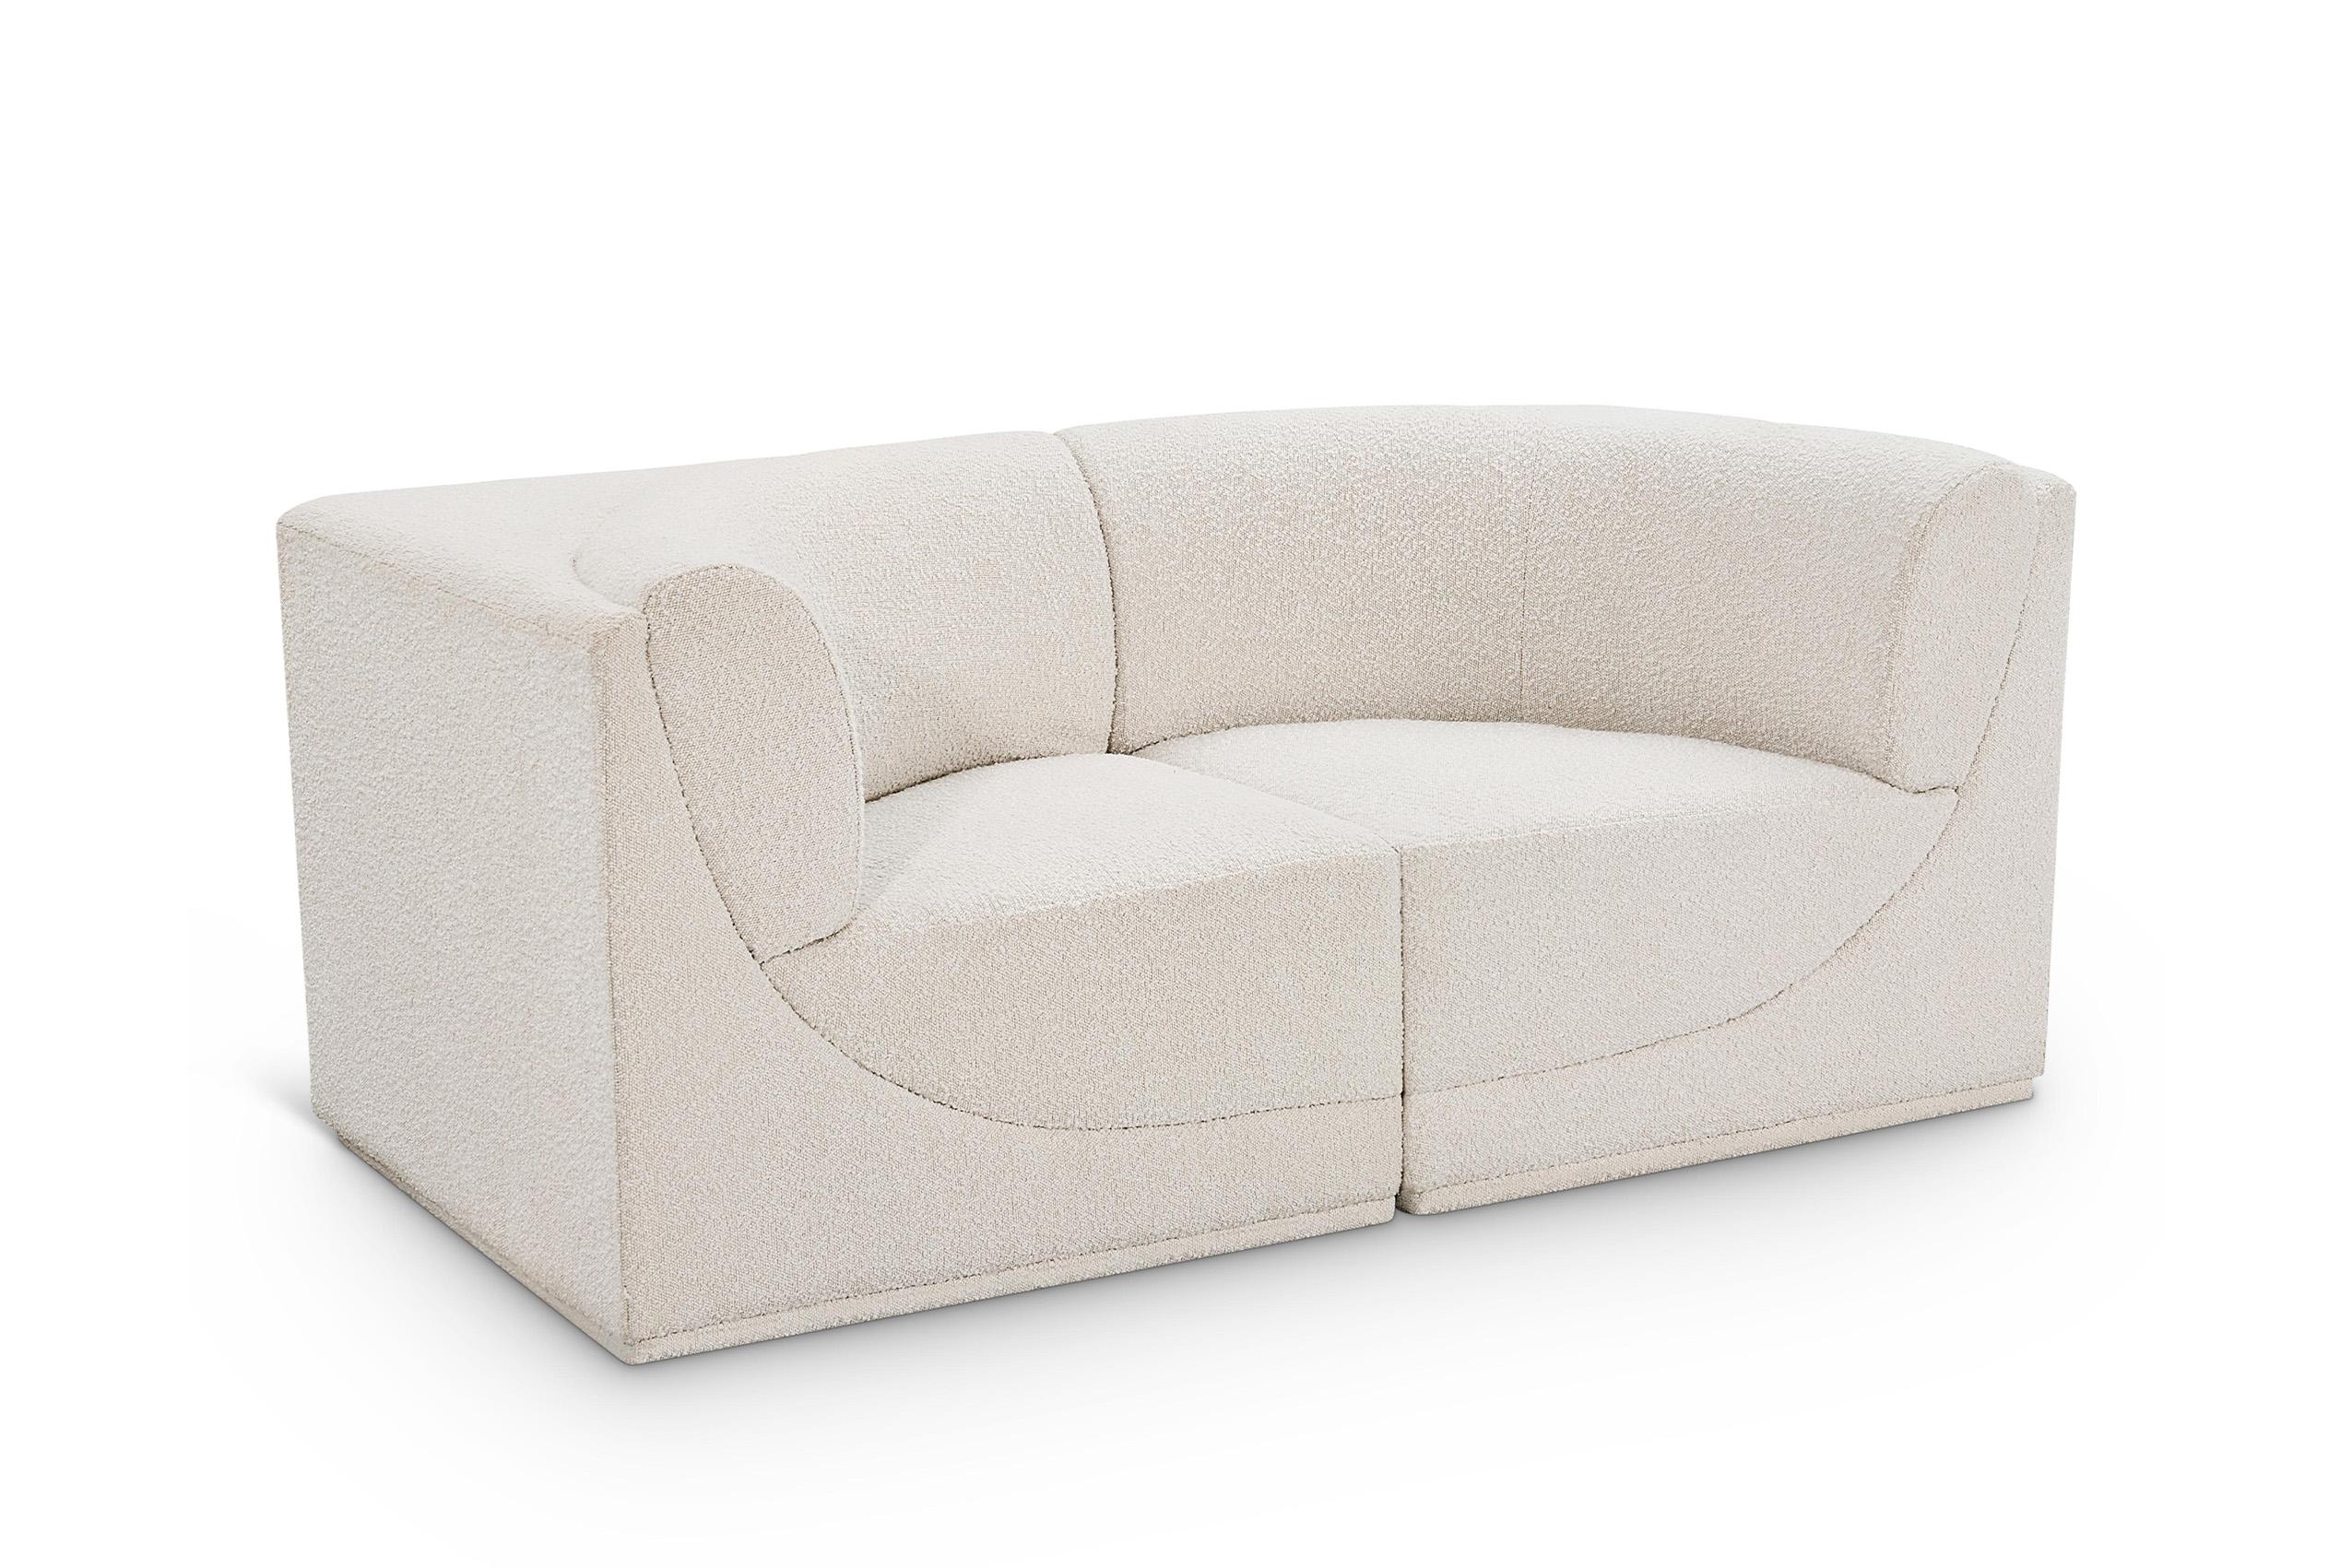 Contemporary, Modern Modular Sofa Ollie 118Cream-S68 118Cream-S68 in Cream 